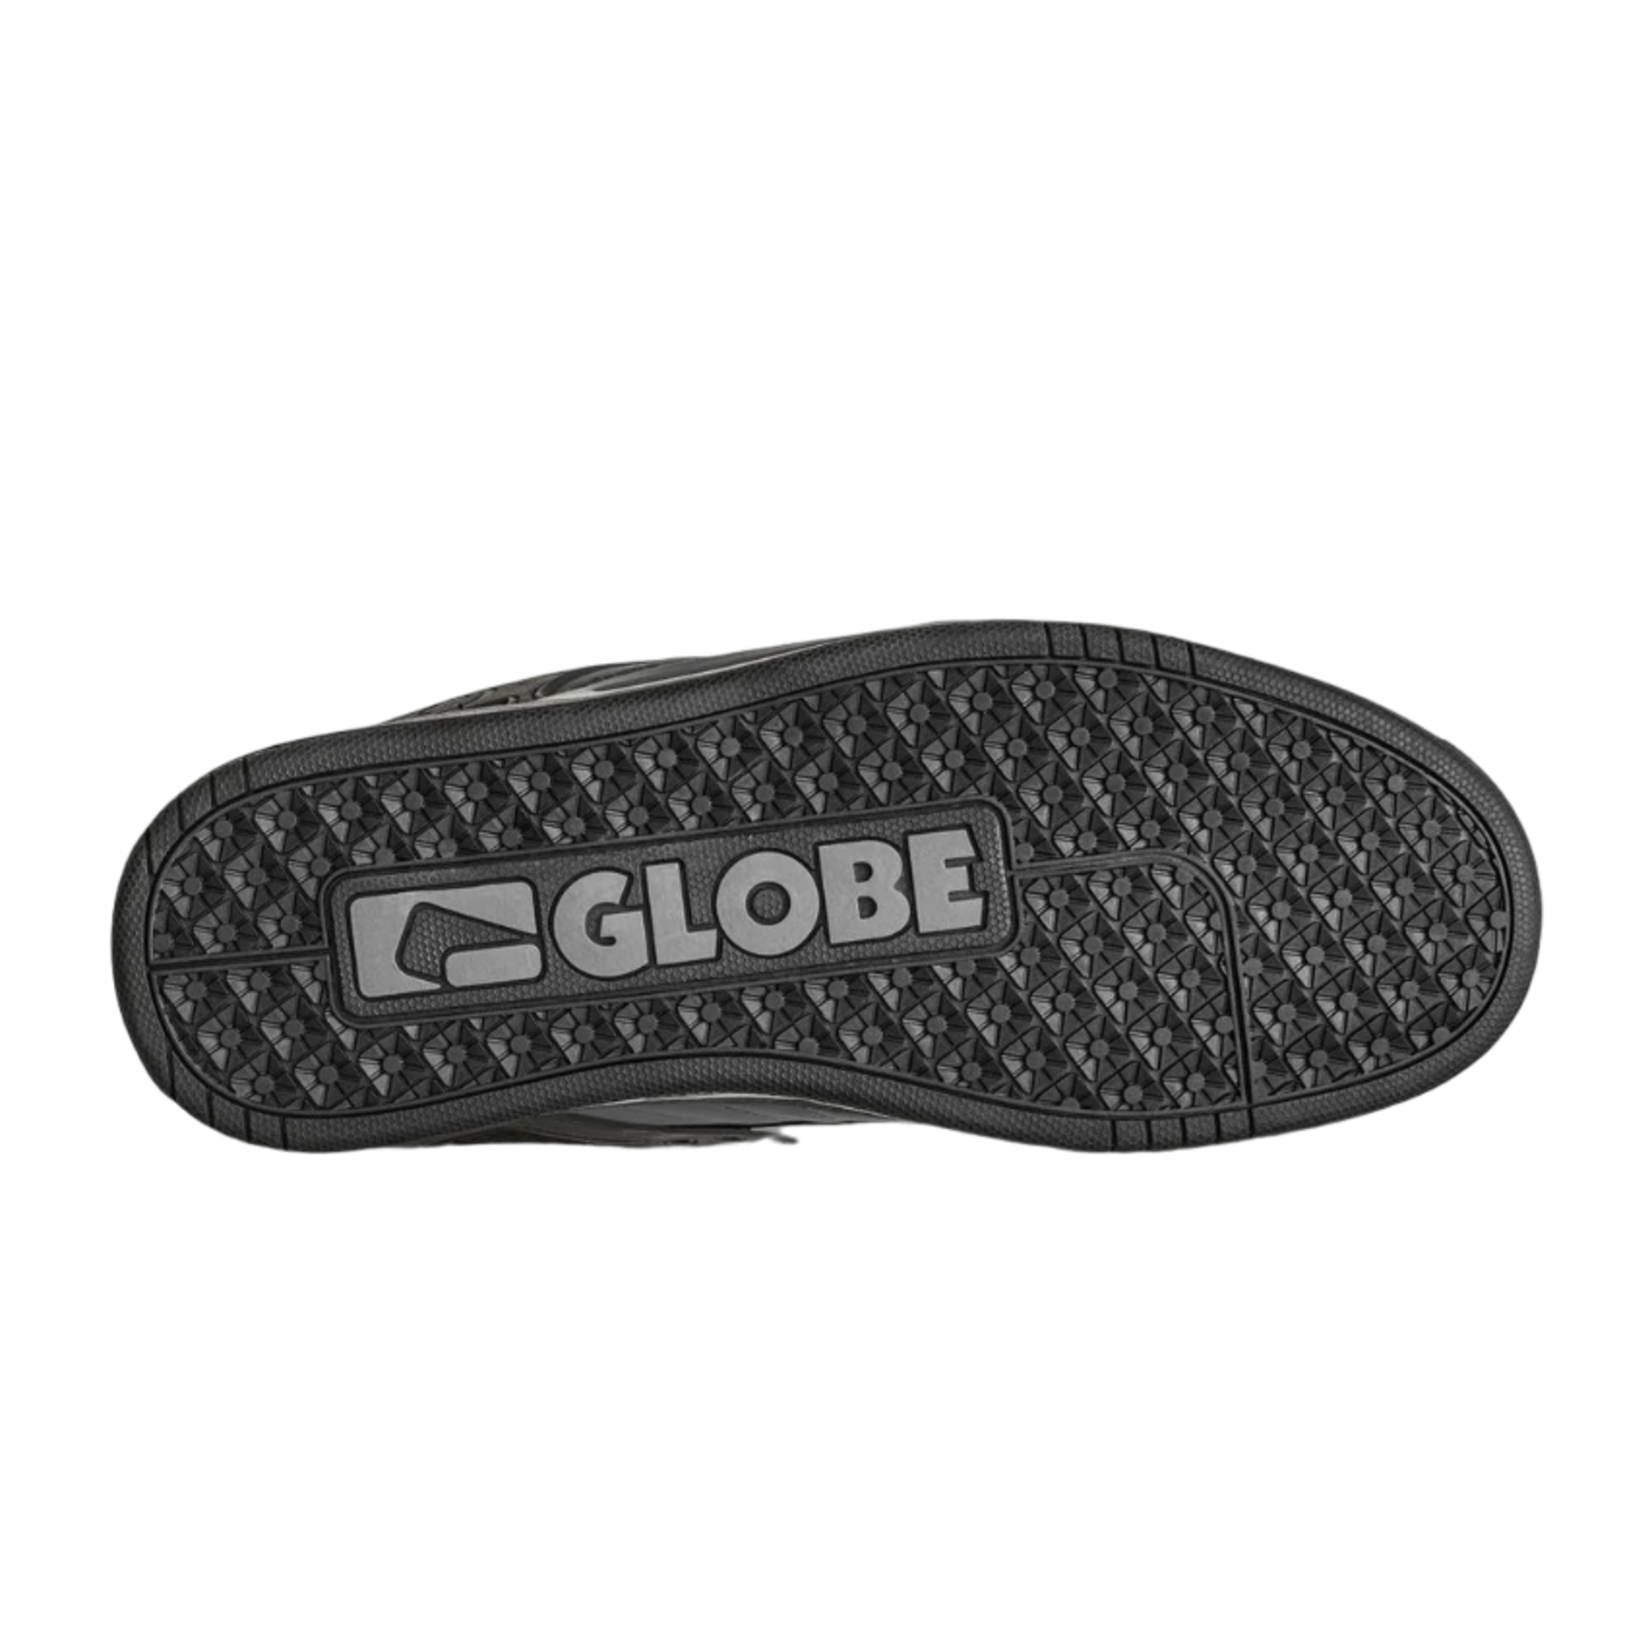 Globe Motley Mid Kids Black Chambray/White Skate Shoes - Size 1 or